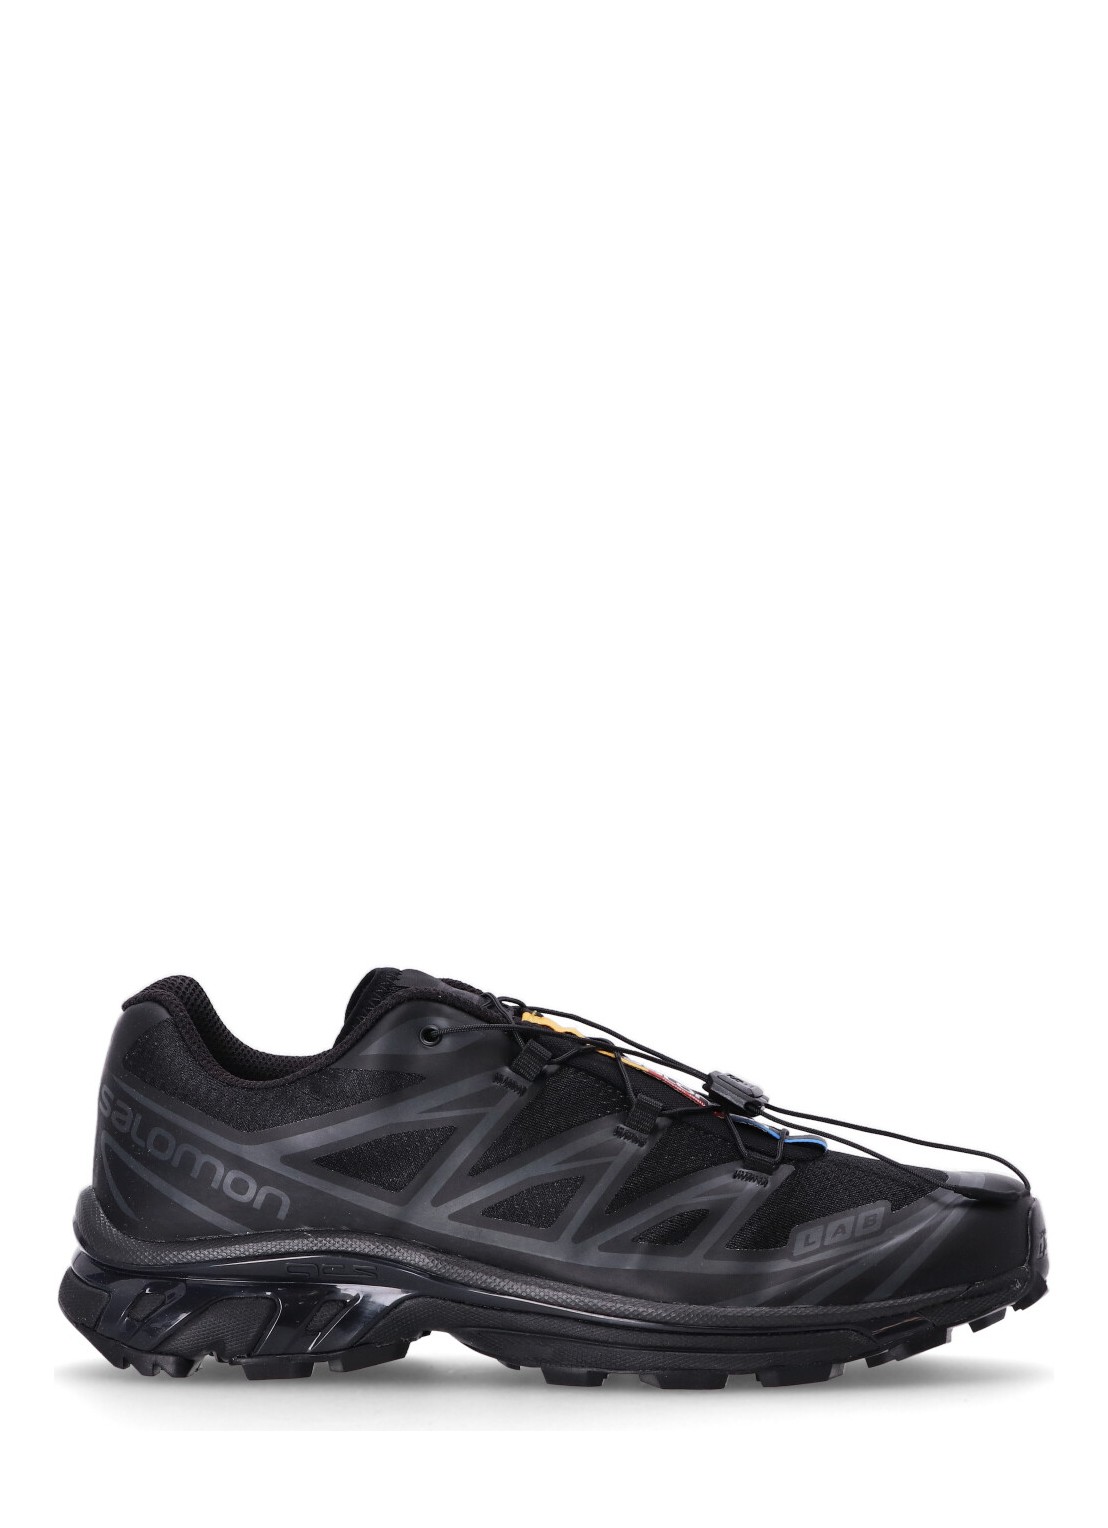 Sneaker salomon sneaker man xt-6 l41086600 black black phantom talla 46
 